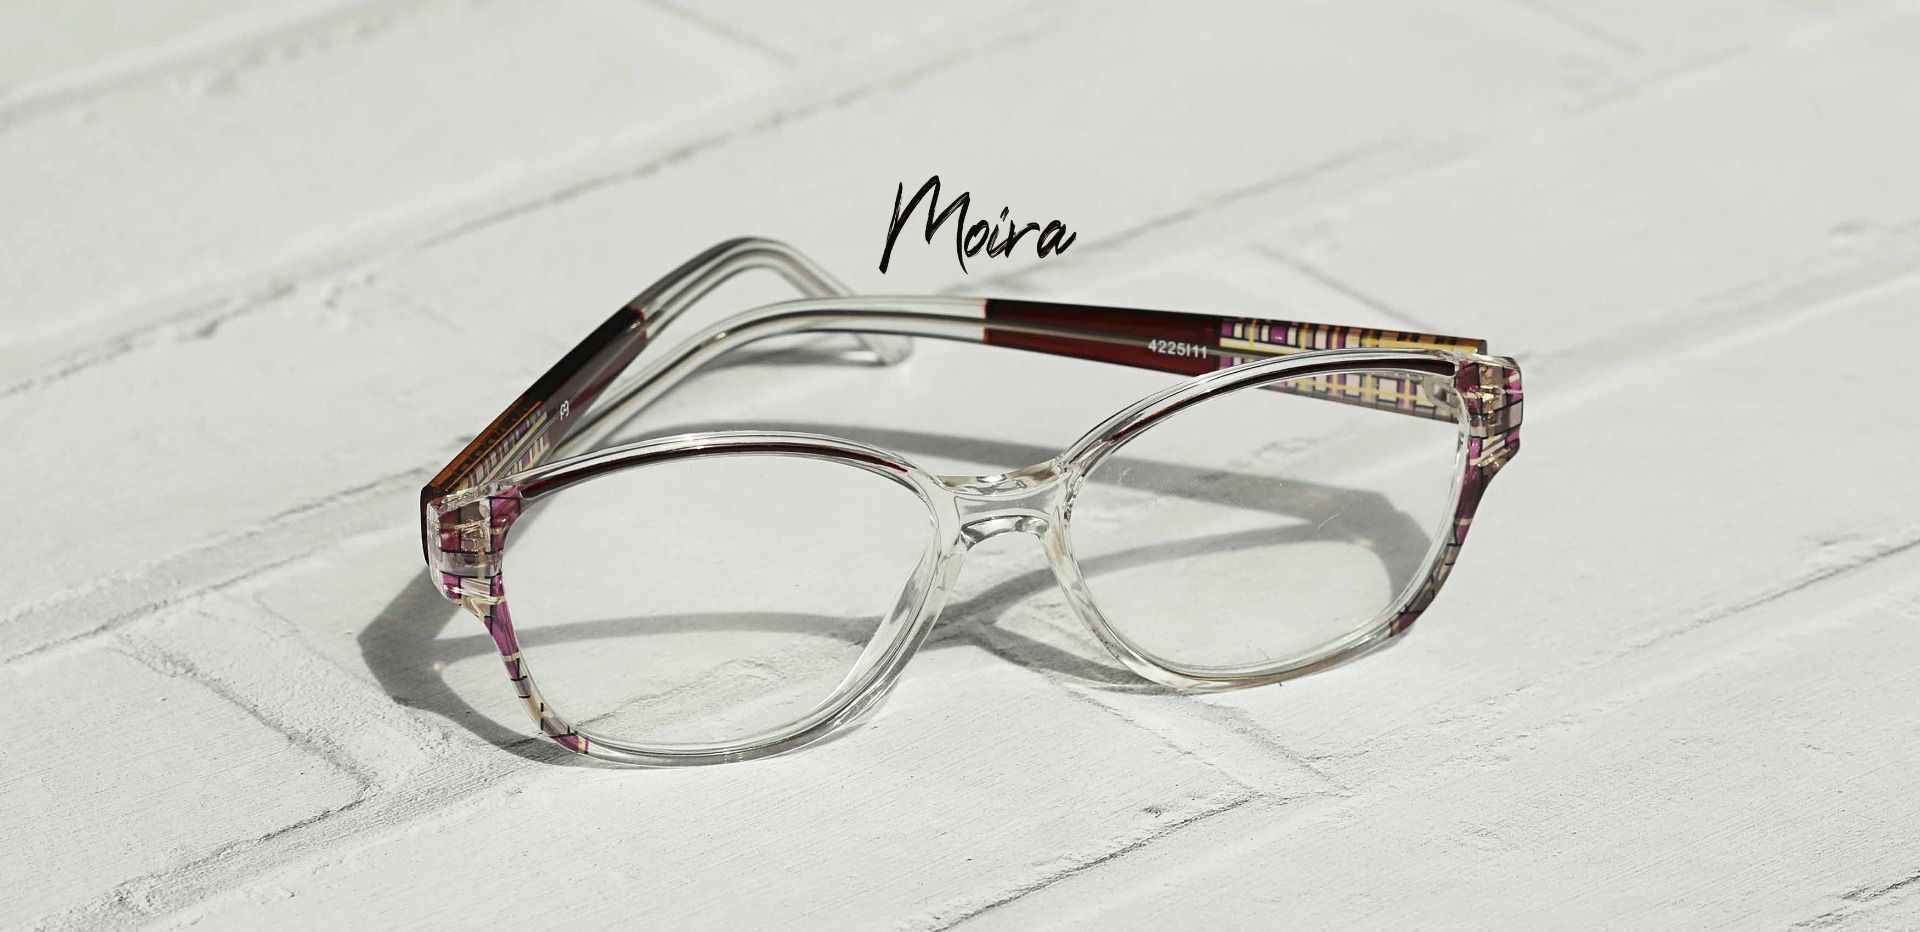 Moira Oval Prescription Glasses - Pink